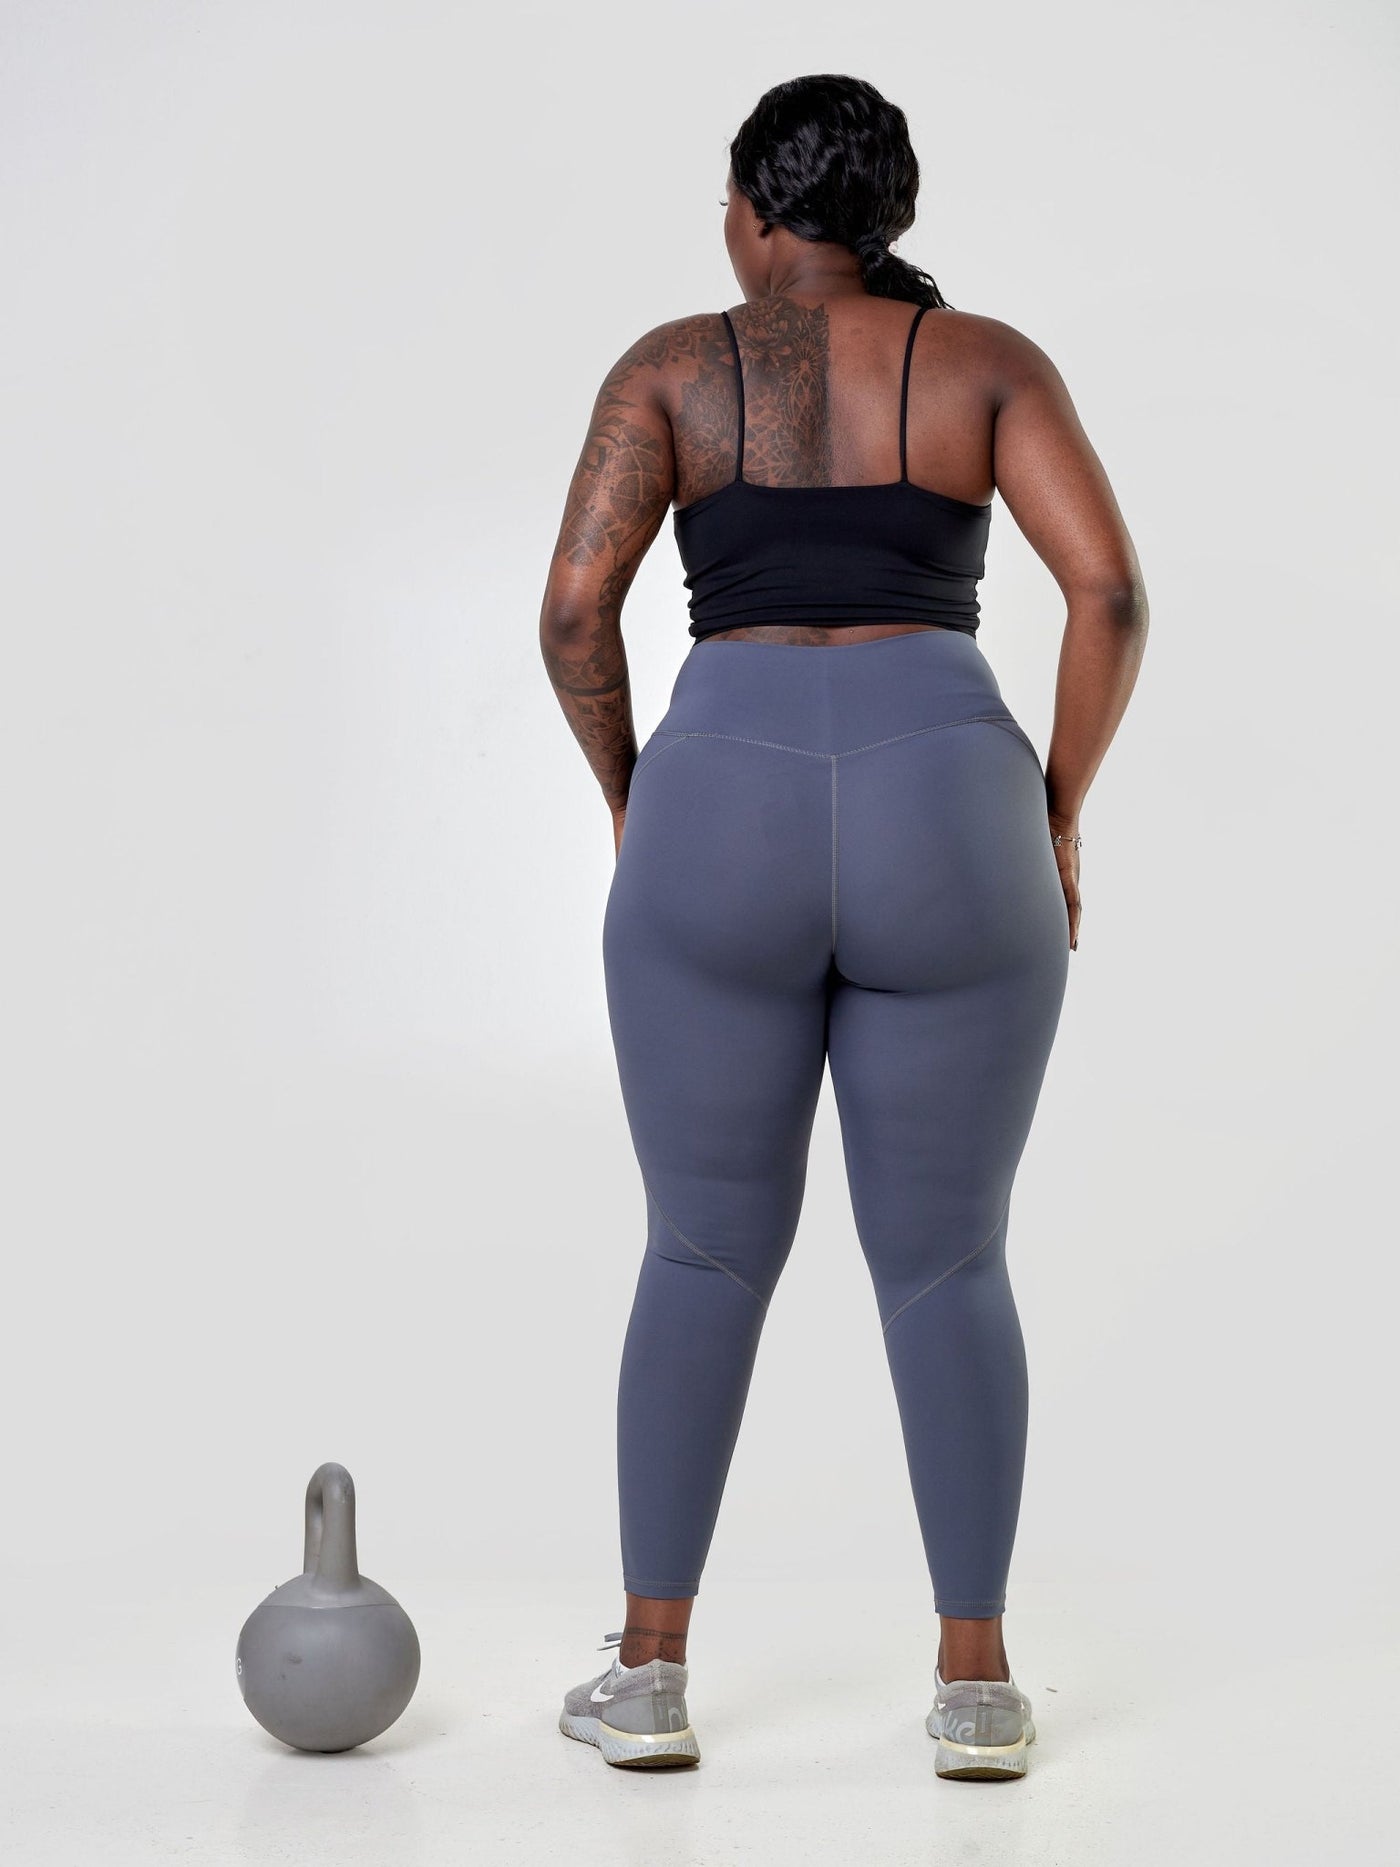 Ava Fitness Progress High Waisted Leggings - Dark Grey - Shopzetu